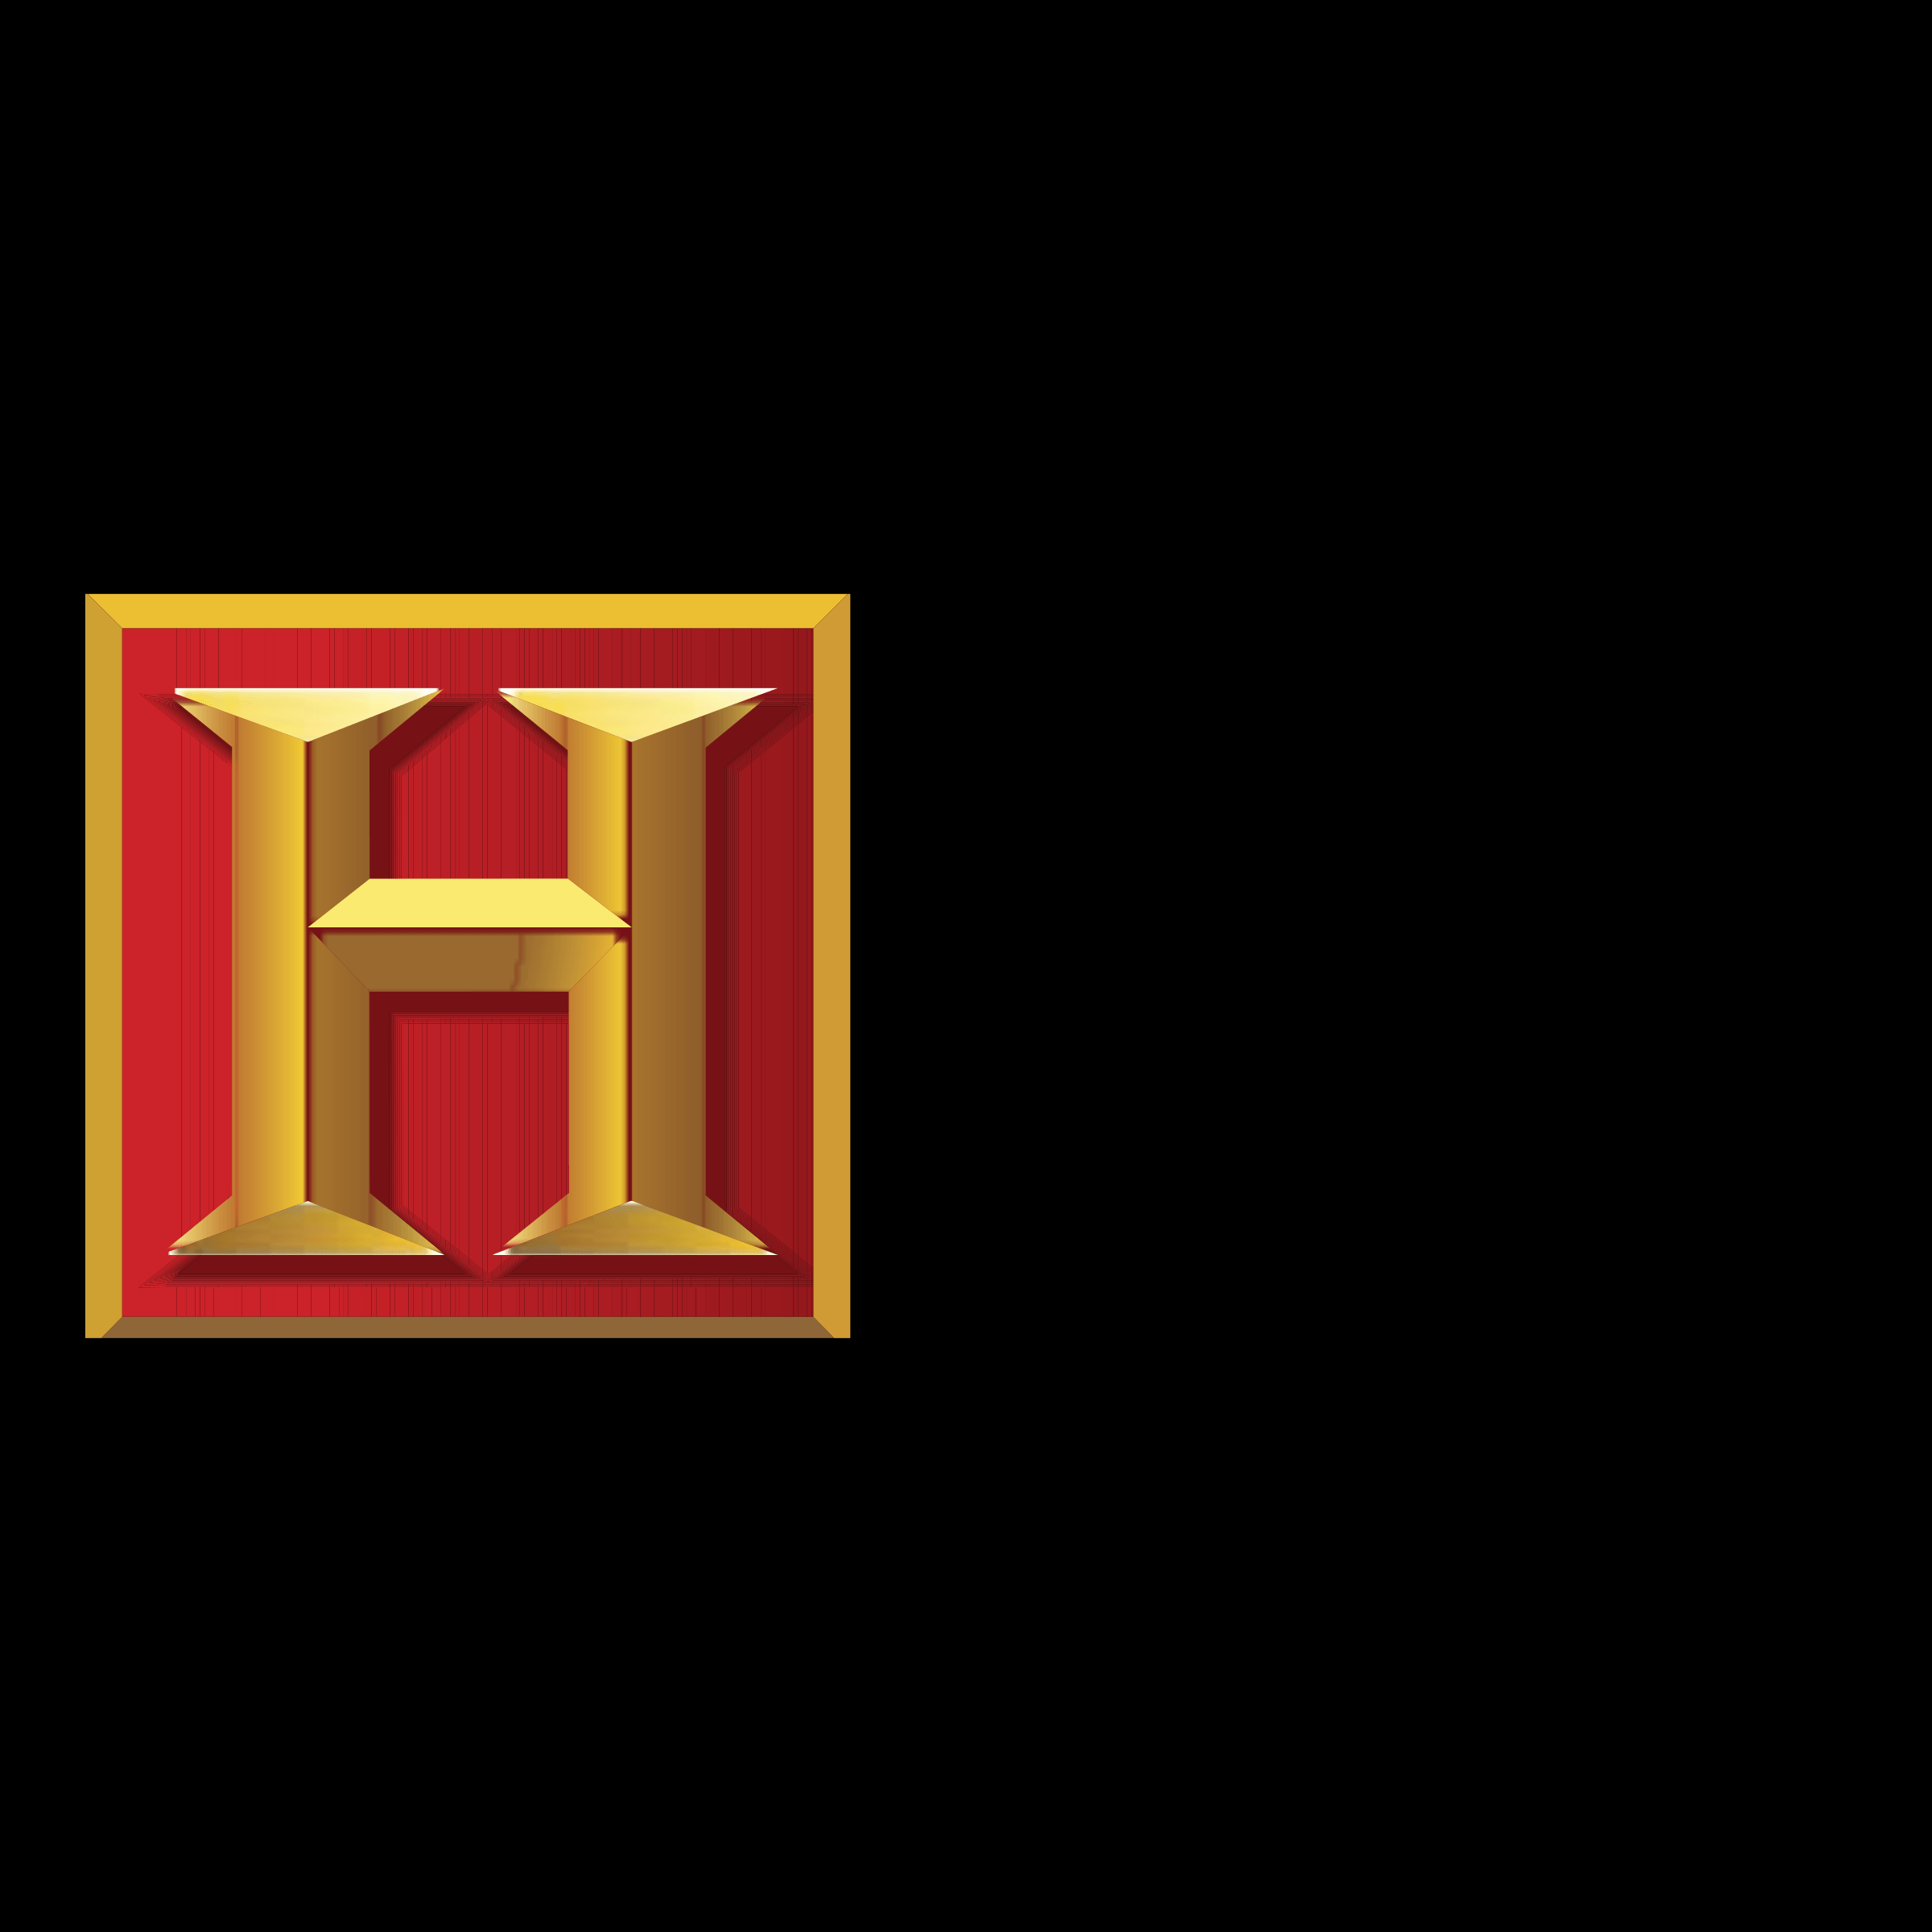 History Channel Logo - History Channel Logo PNG Transparent & SVG Vector - Freebie Supply